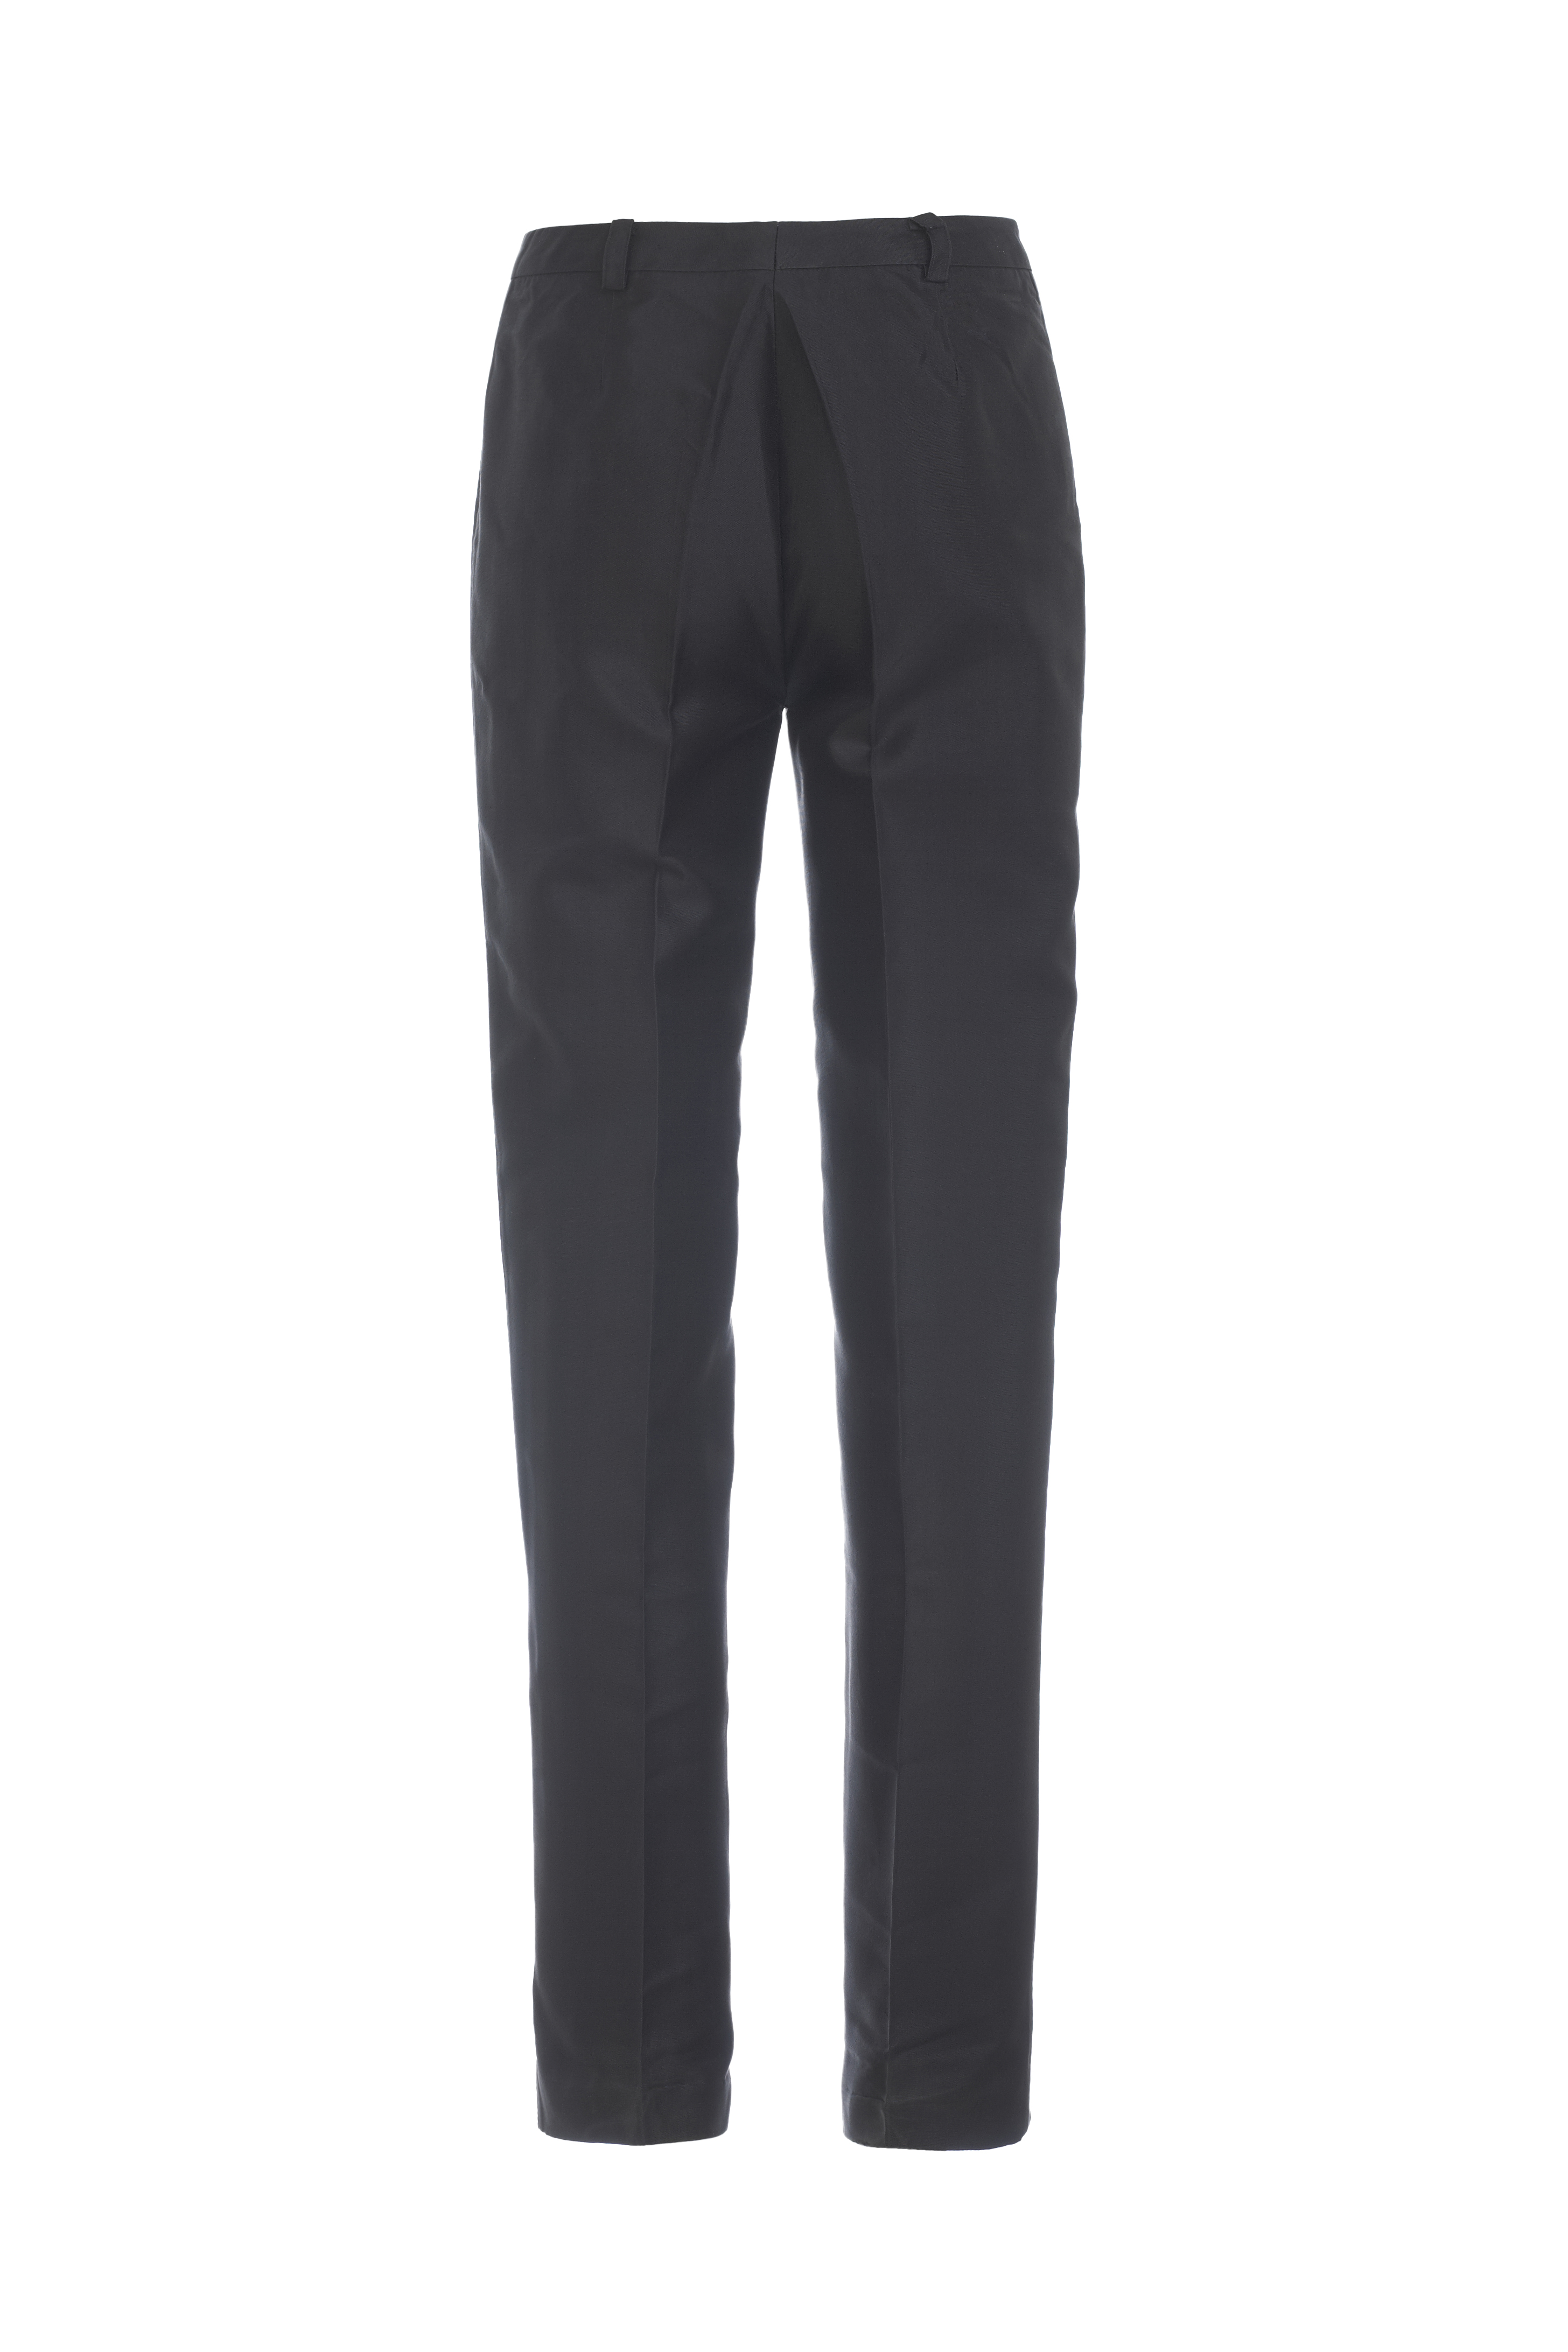 Prada black trousers | Curate8